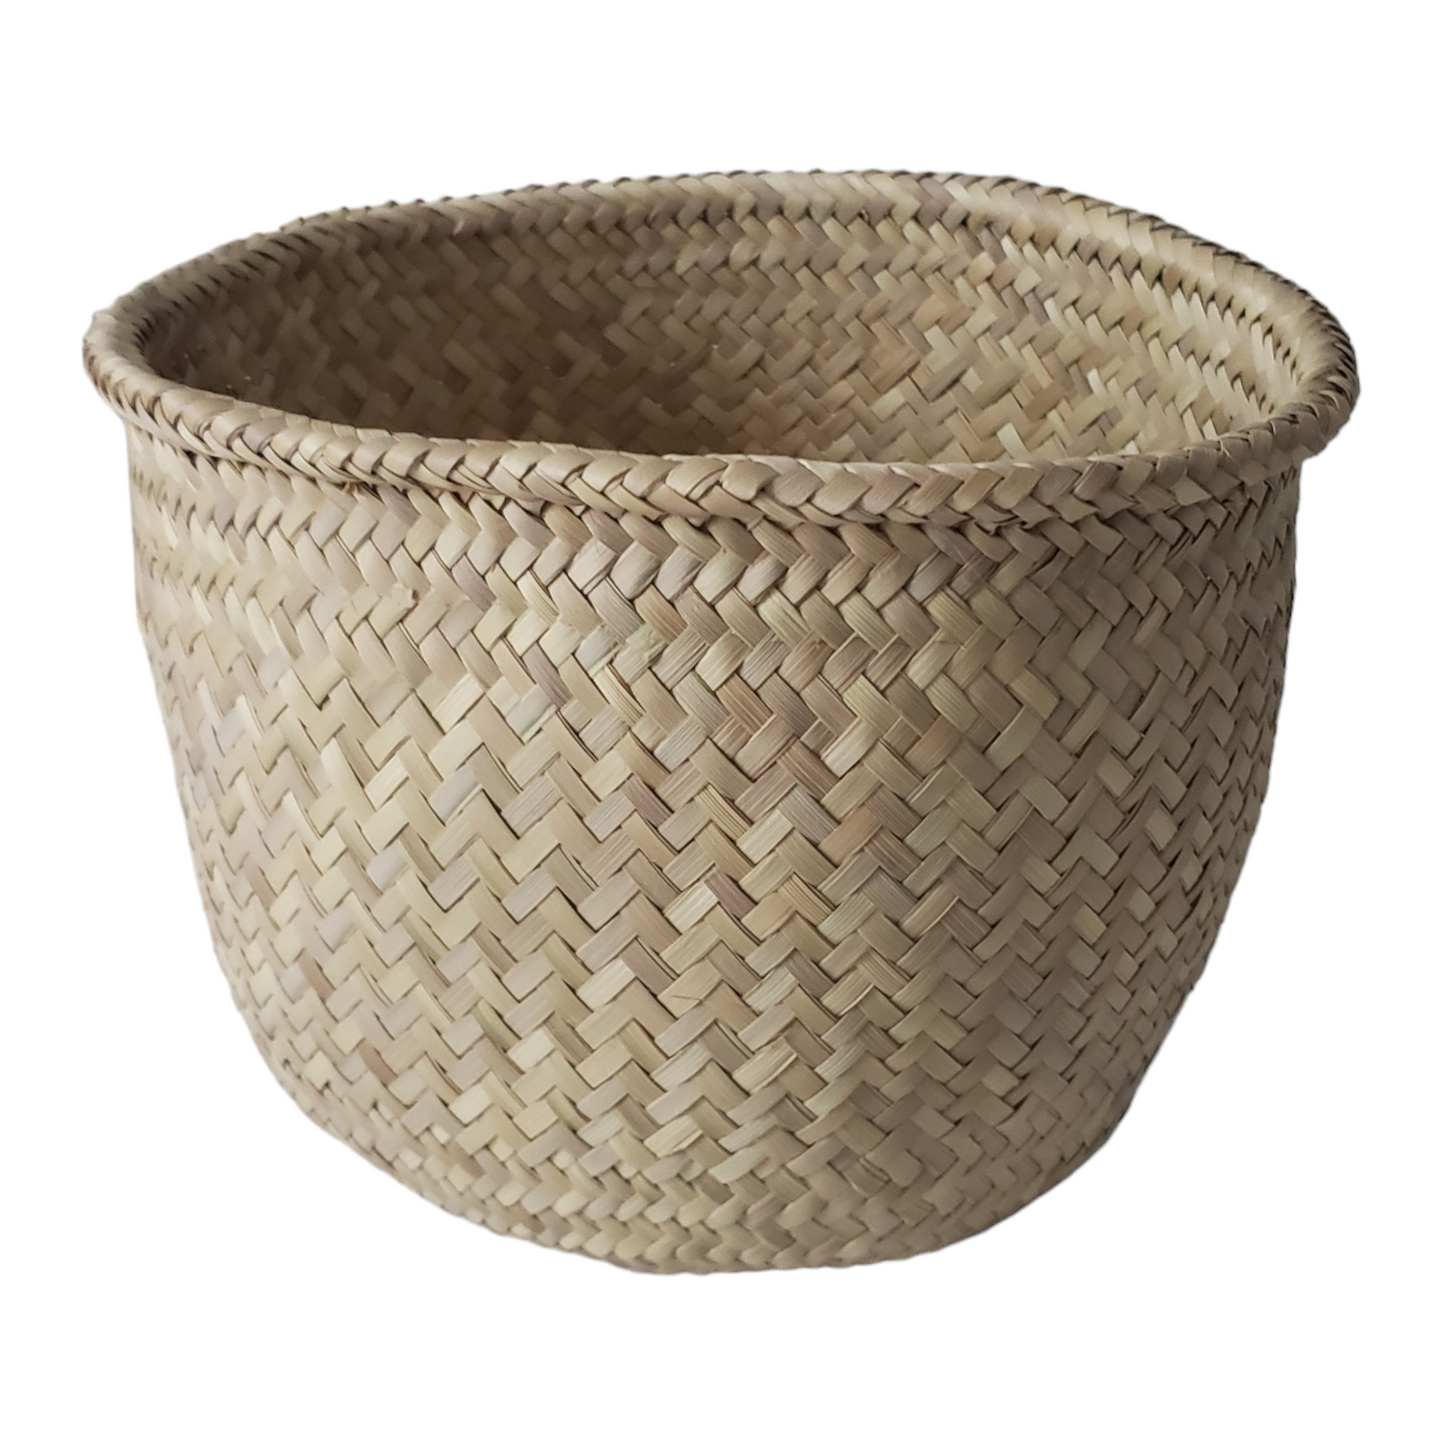 Medium Round Oaxaca Palm Basket